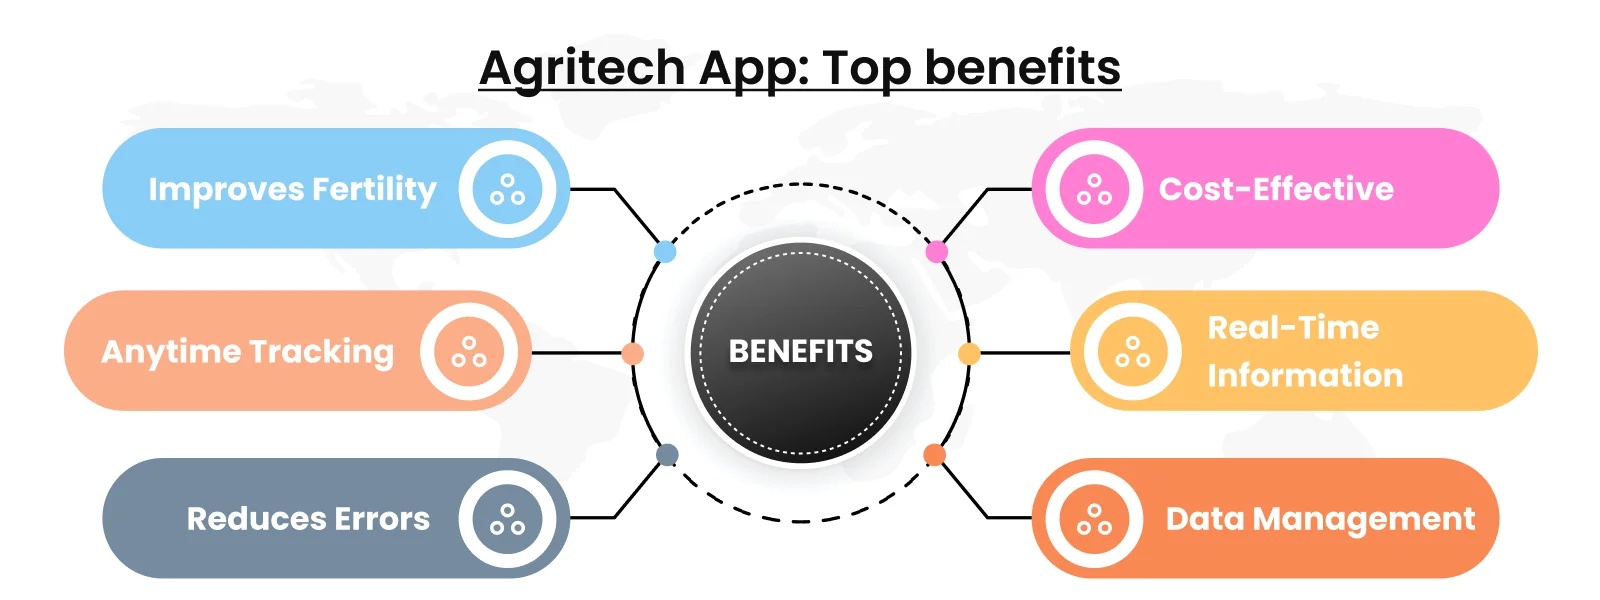 Agritech App benefits